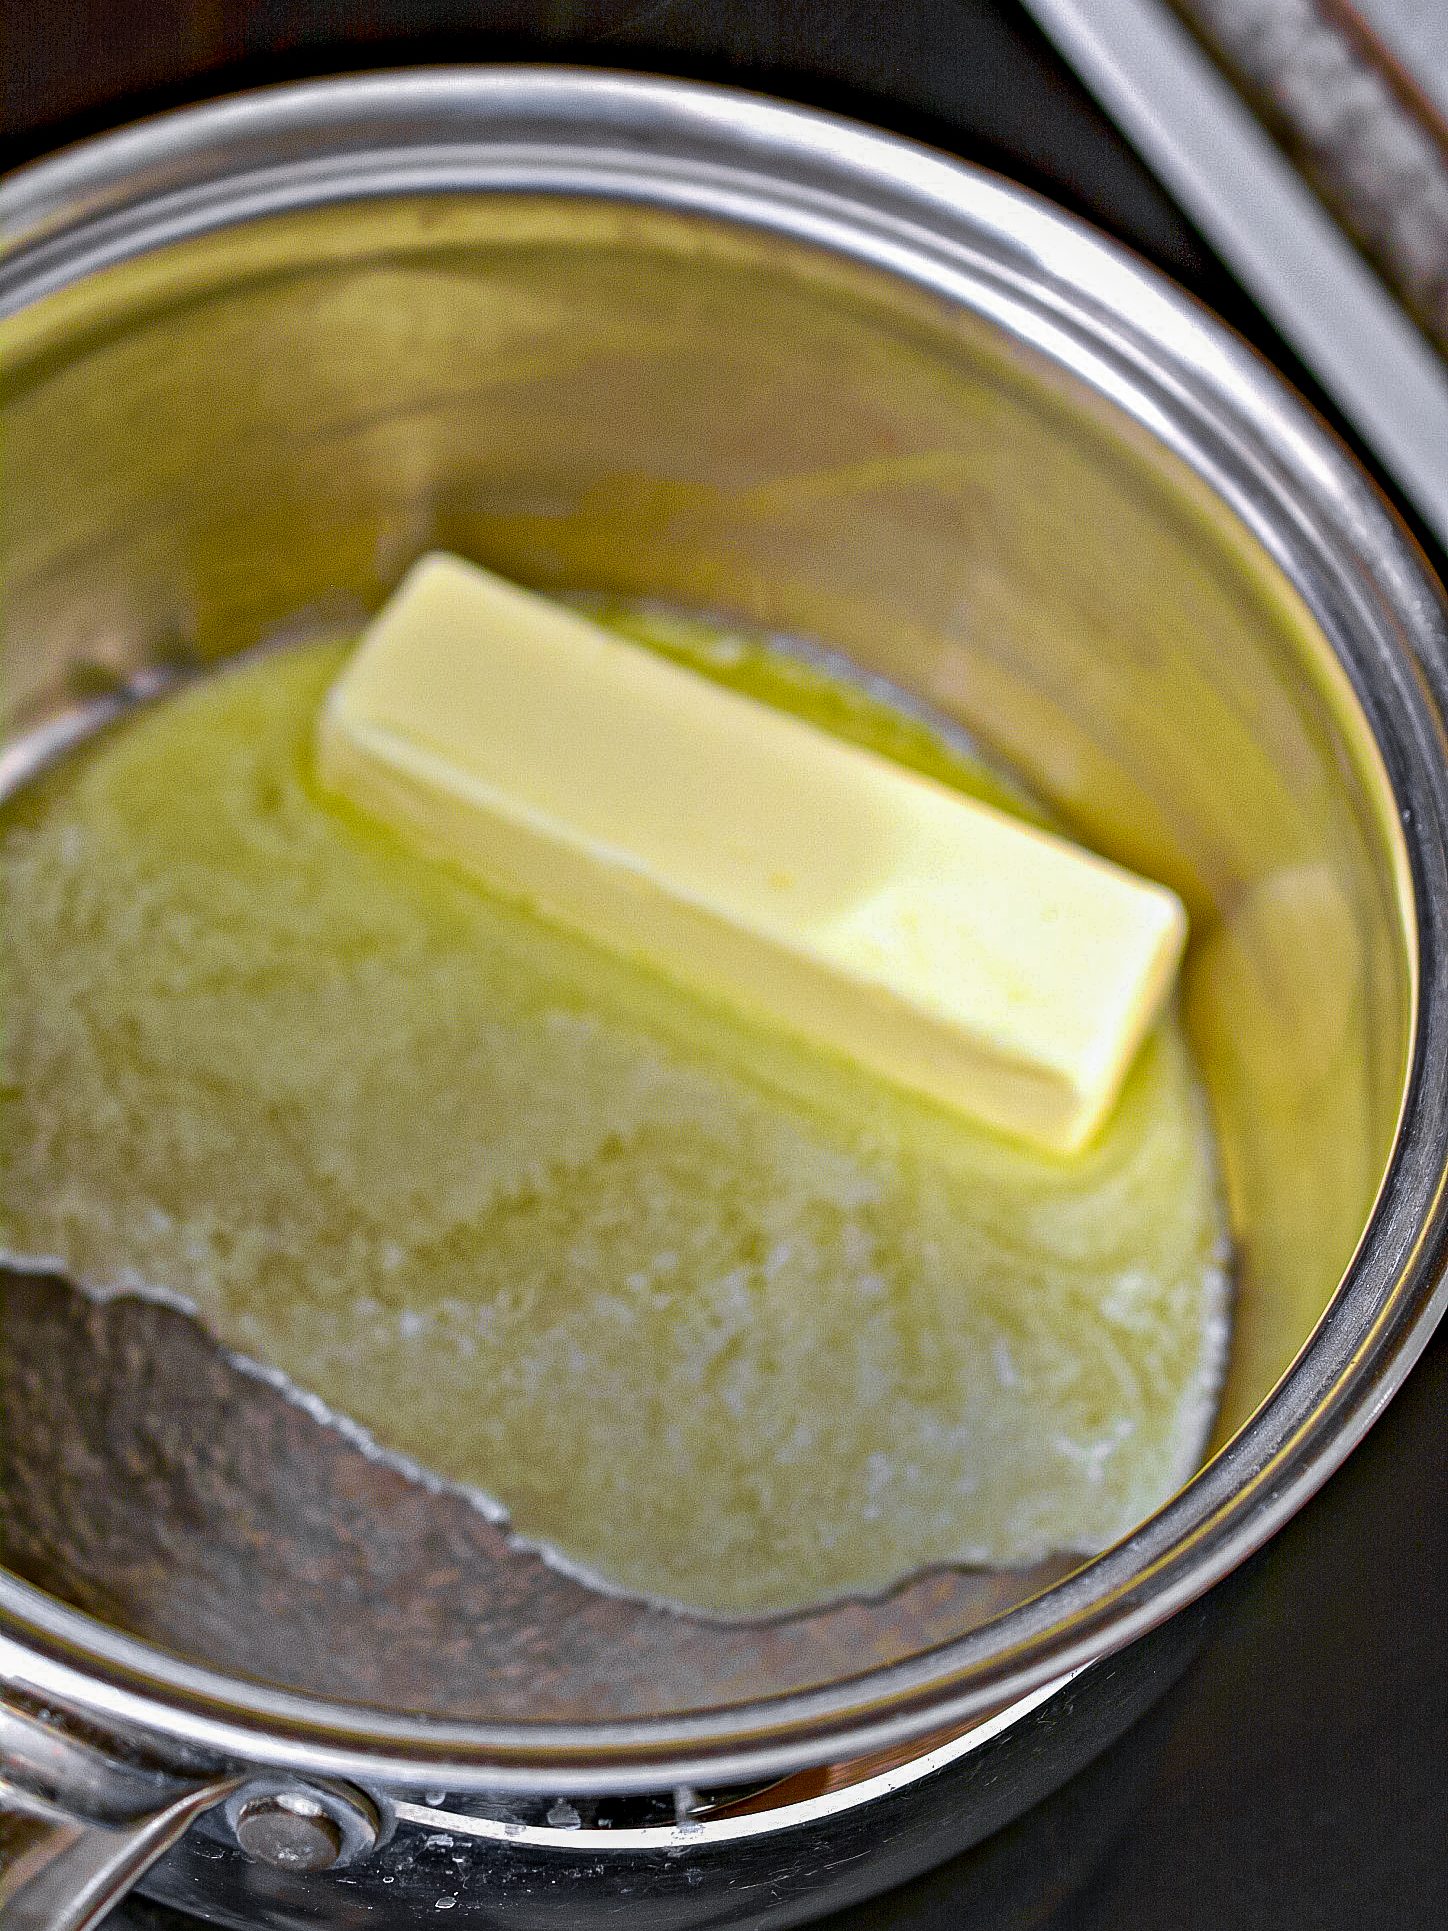 In a saucepan over medium-high heat on the stove, add 8 tbsp butter.